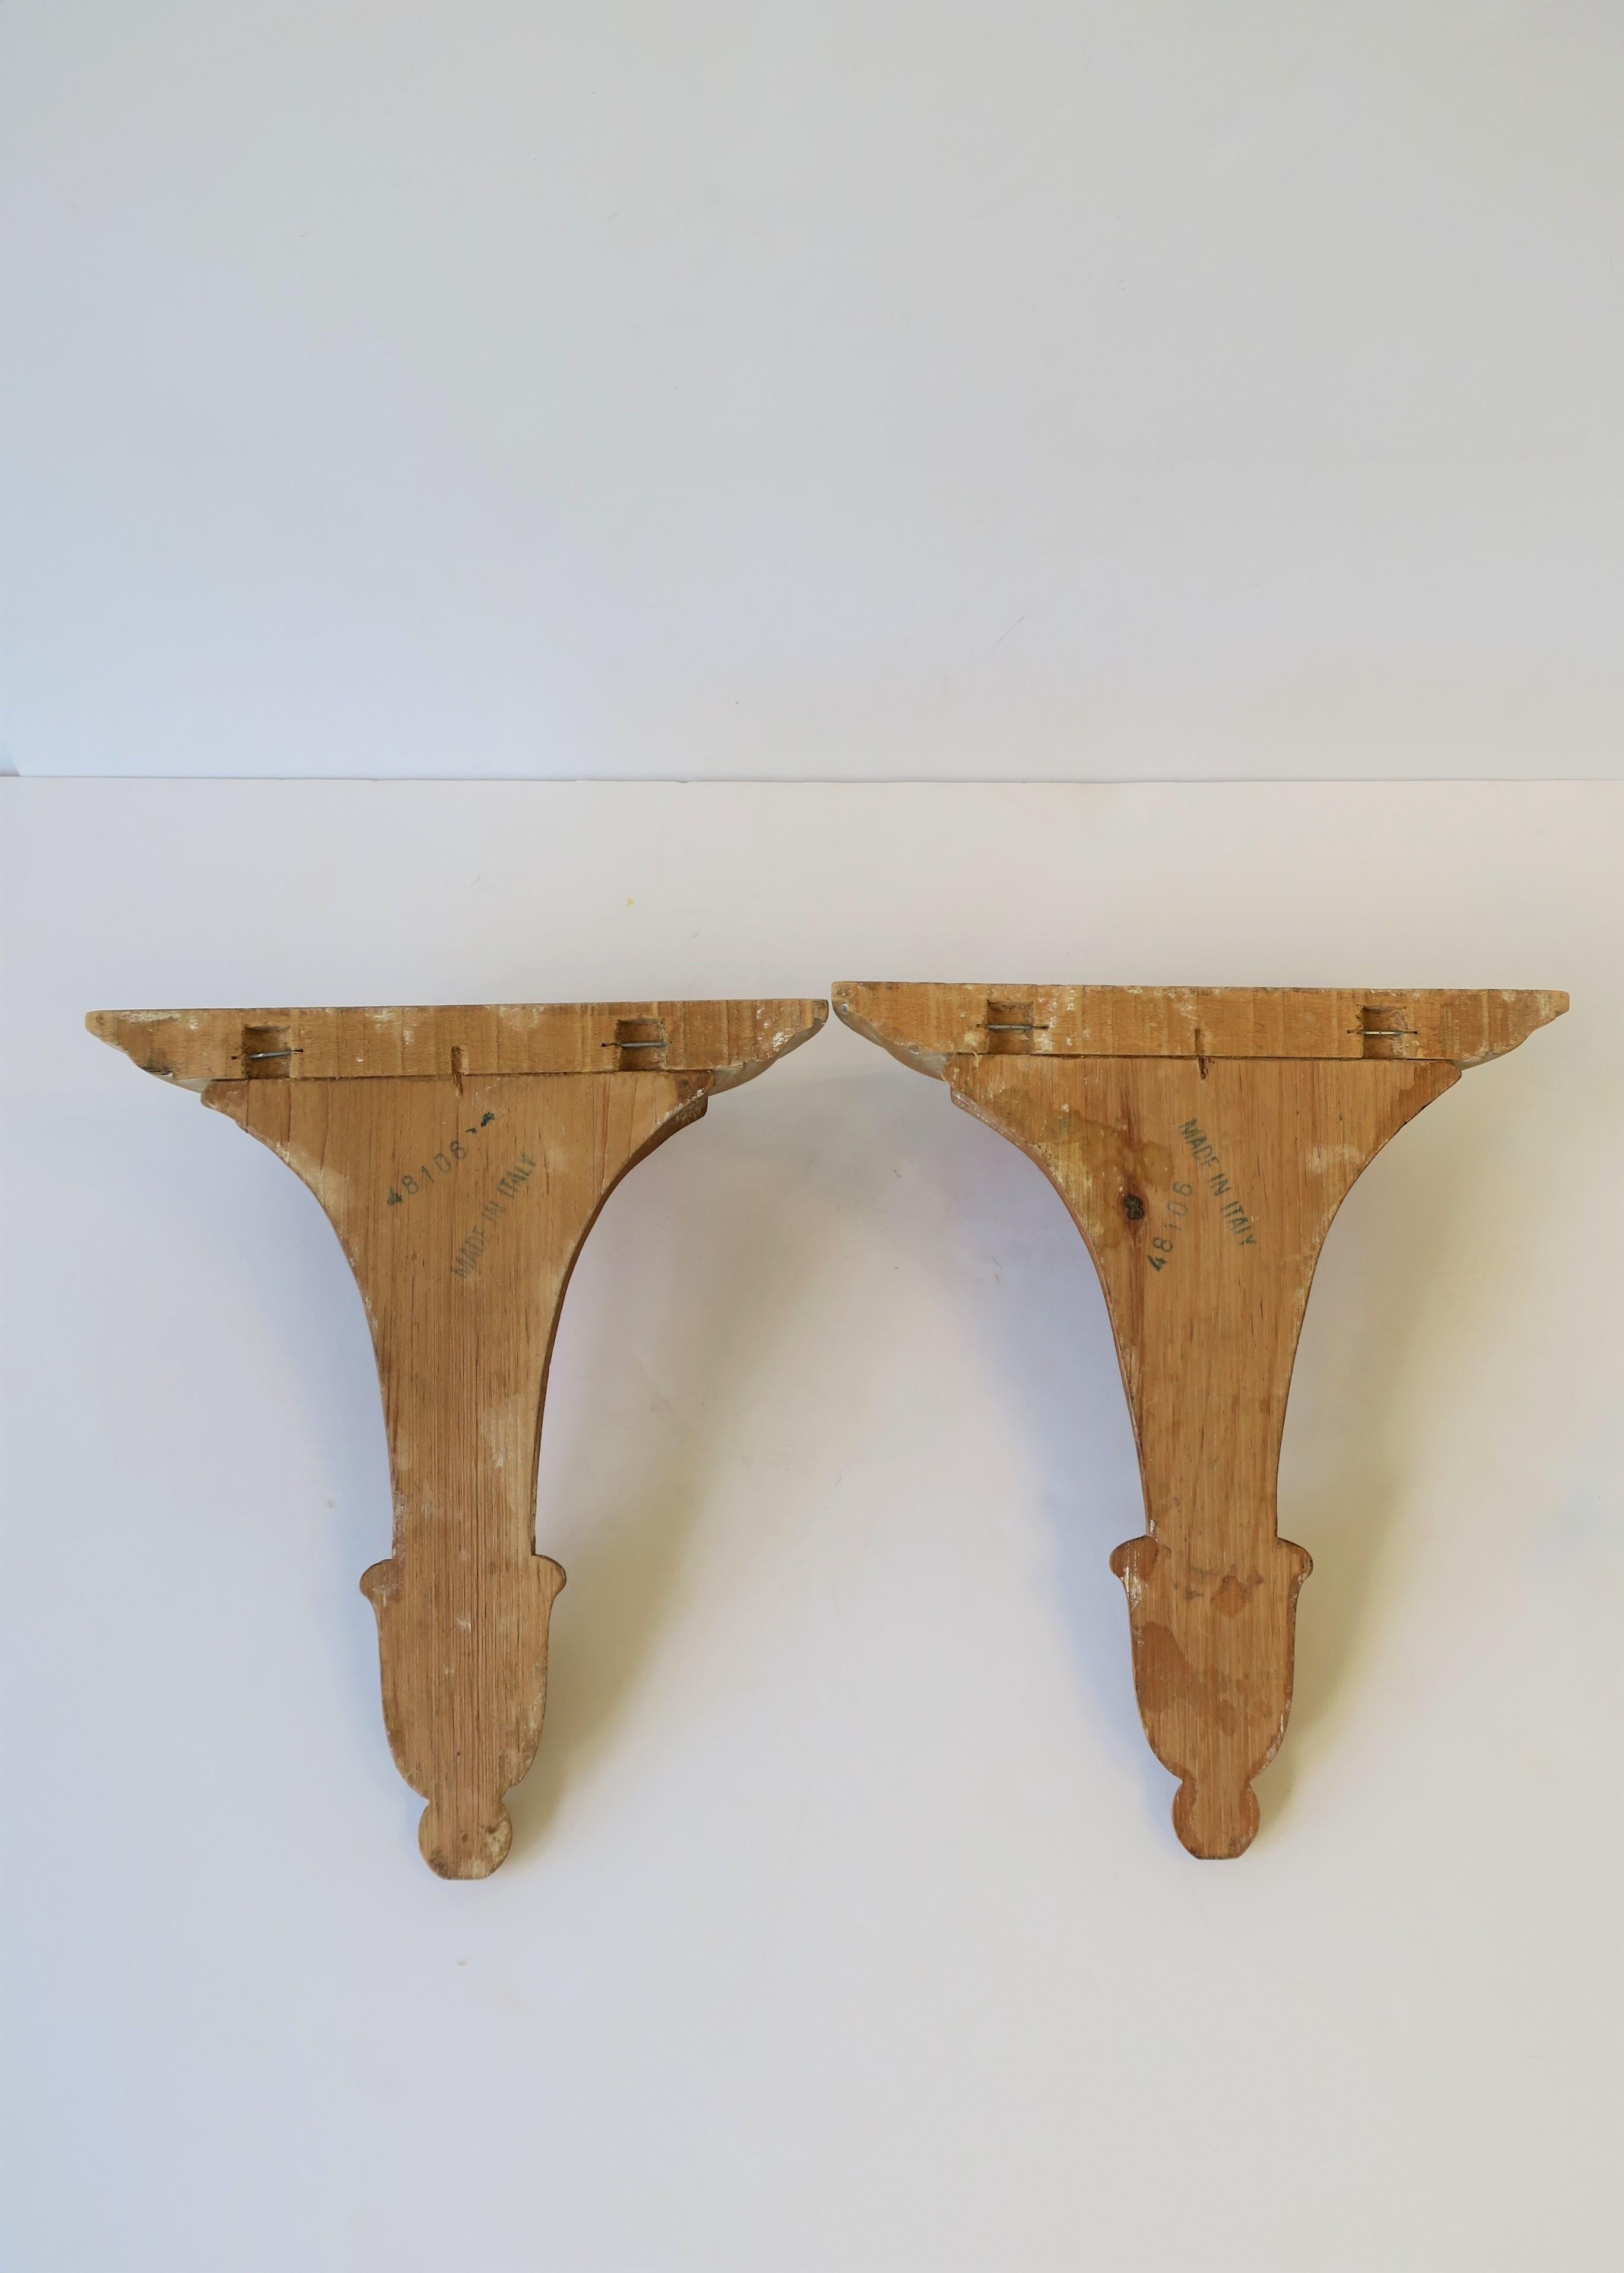 20th Century Italian Wood Wall Shelves or Brackets, Pair